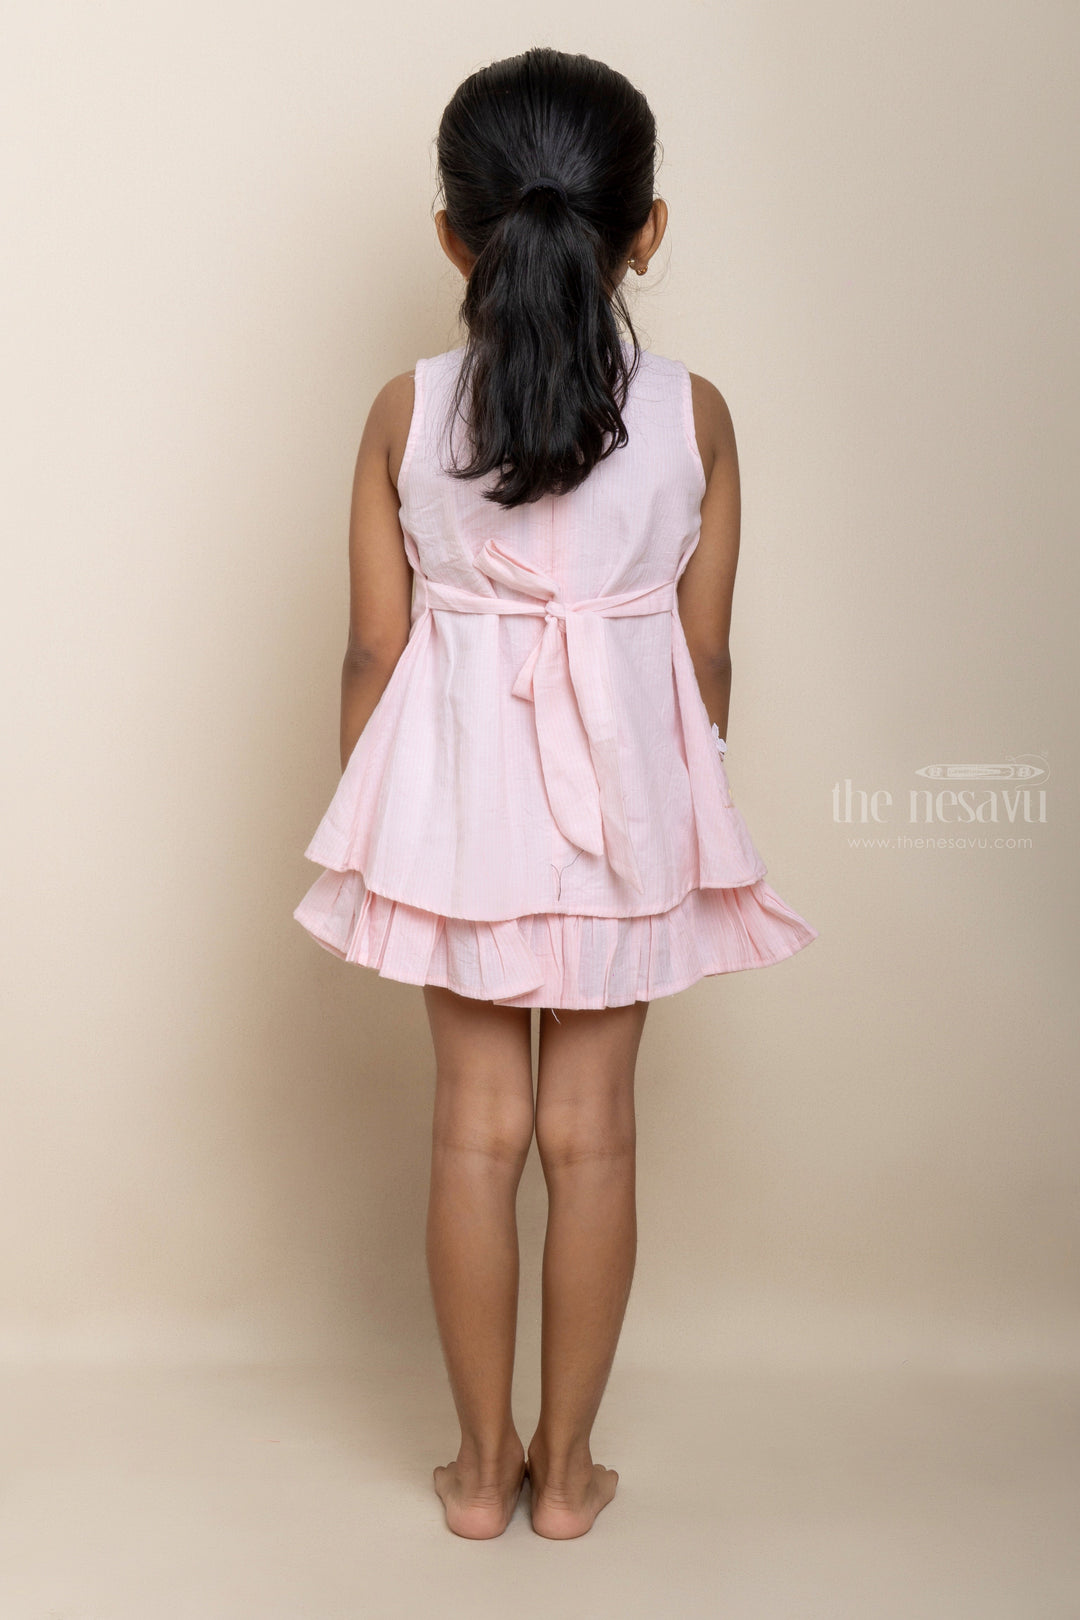 The Nesavu Baby Cotton Frocks Light Peach Pink A-Line Cotton Gown For New Born Baby Girls Nesavu A-Line Frocks For Infants Kids | Baby Girls Cotton Dresses | The Nesavu